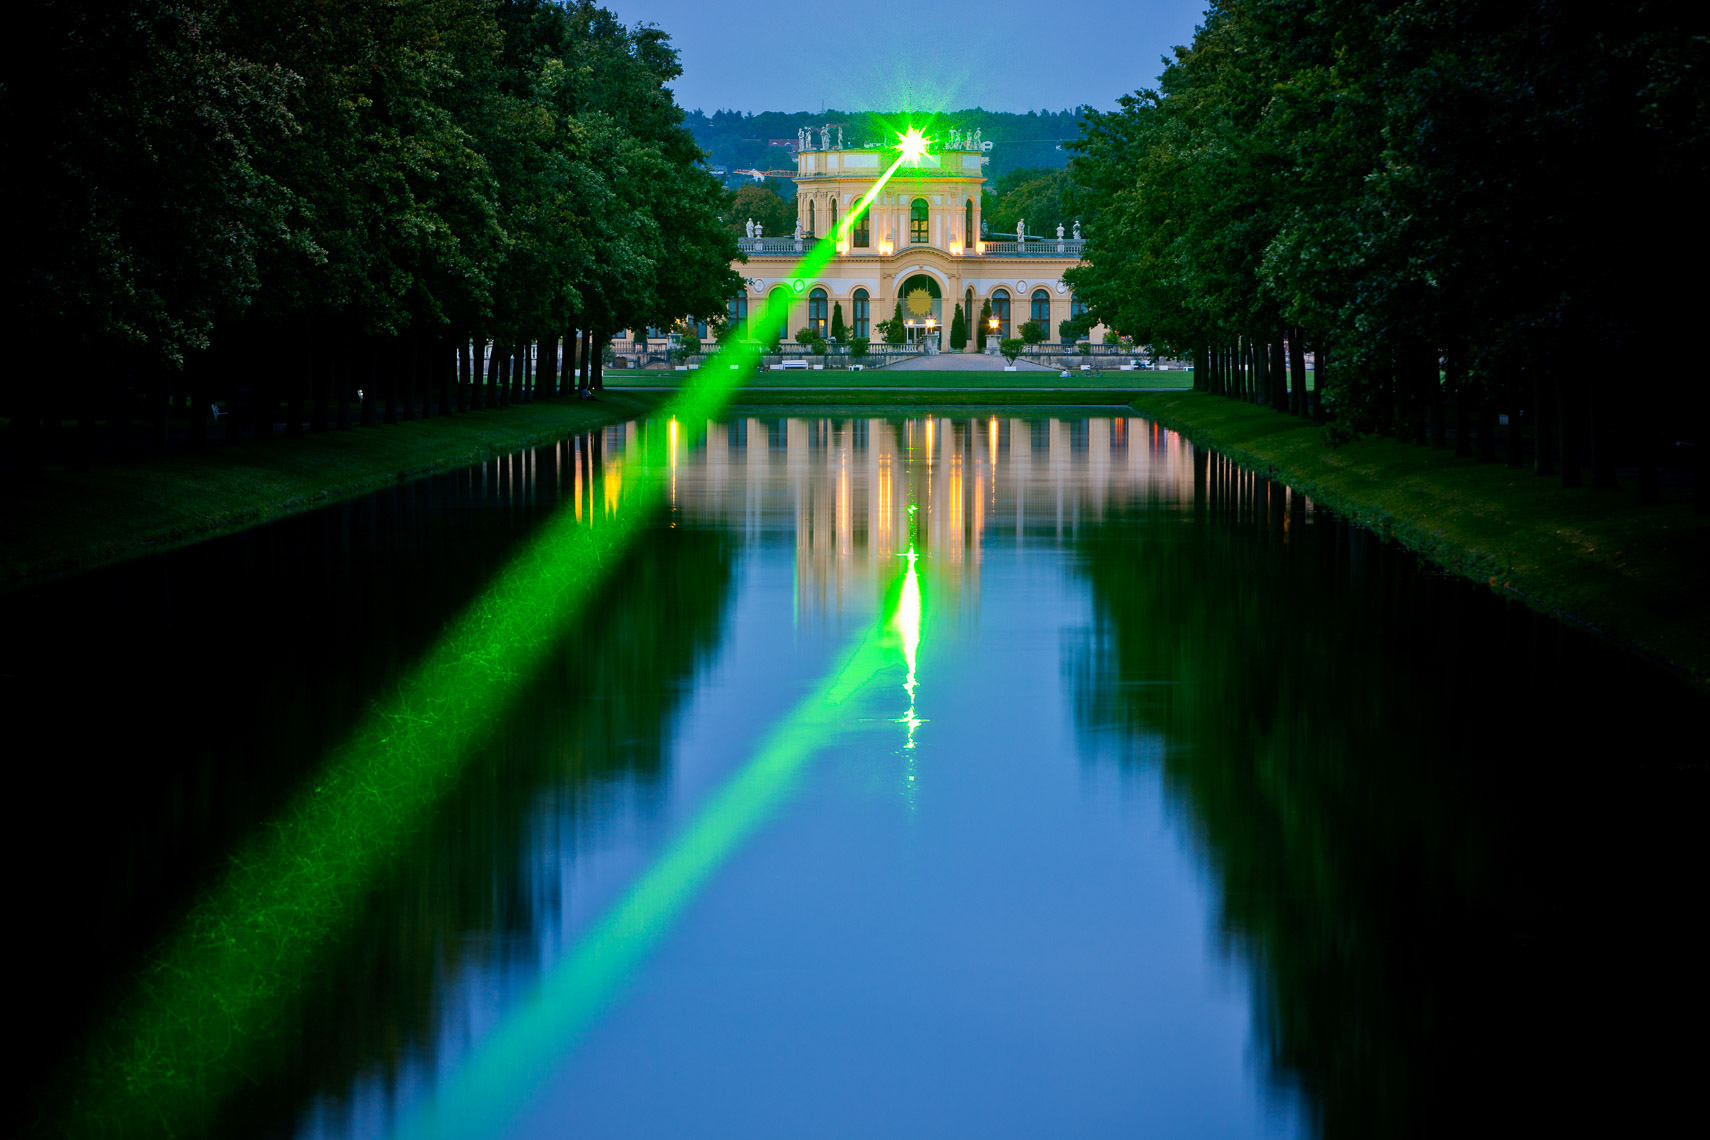 Fotograf in Kassel: „Laserscape Kassel” an der Orangerie / Karlsaue